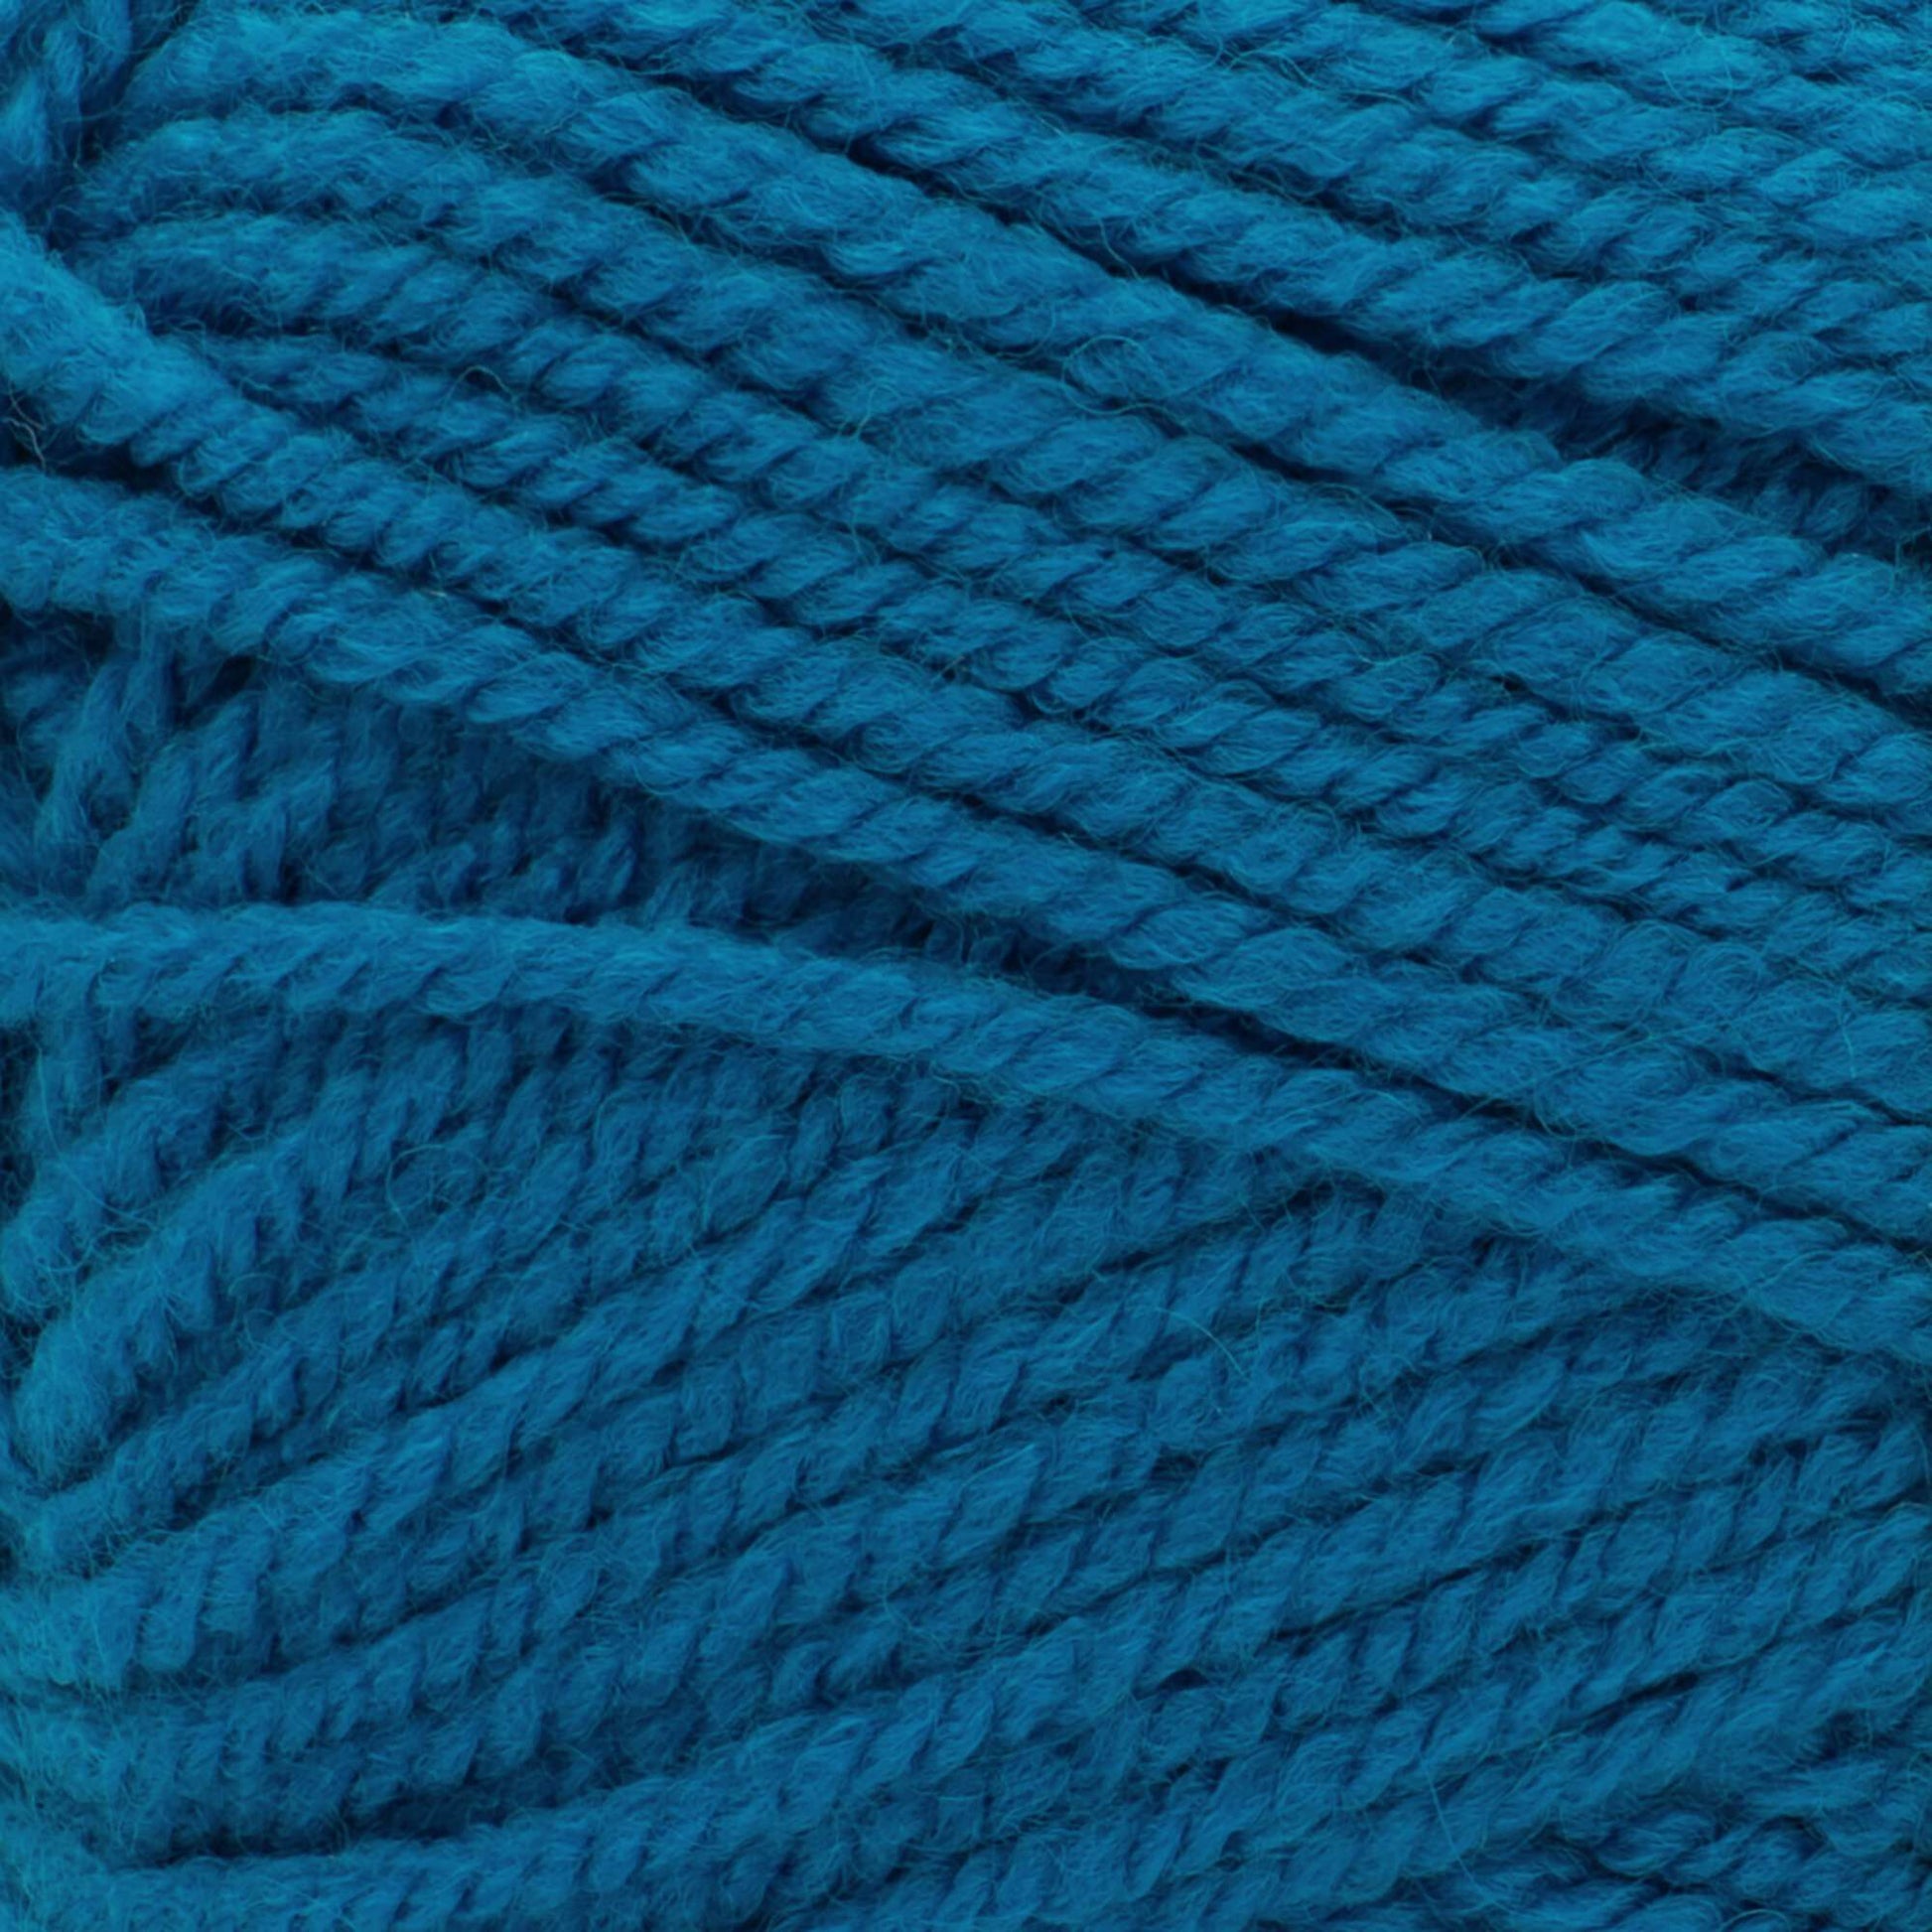 Patons Inspired Yarn Sapphire Teal